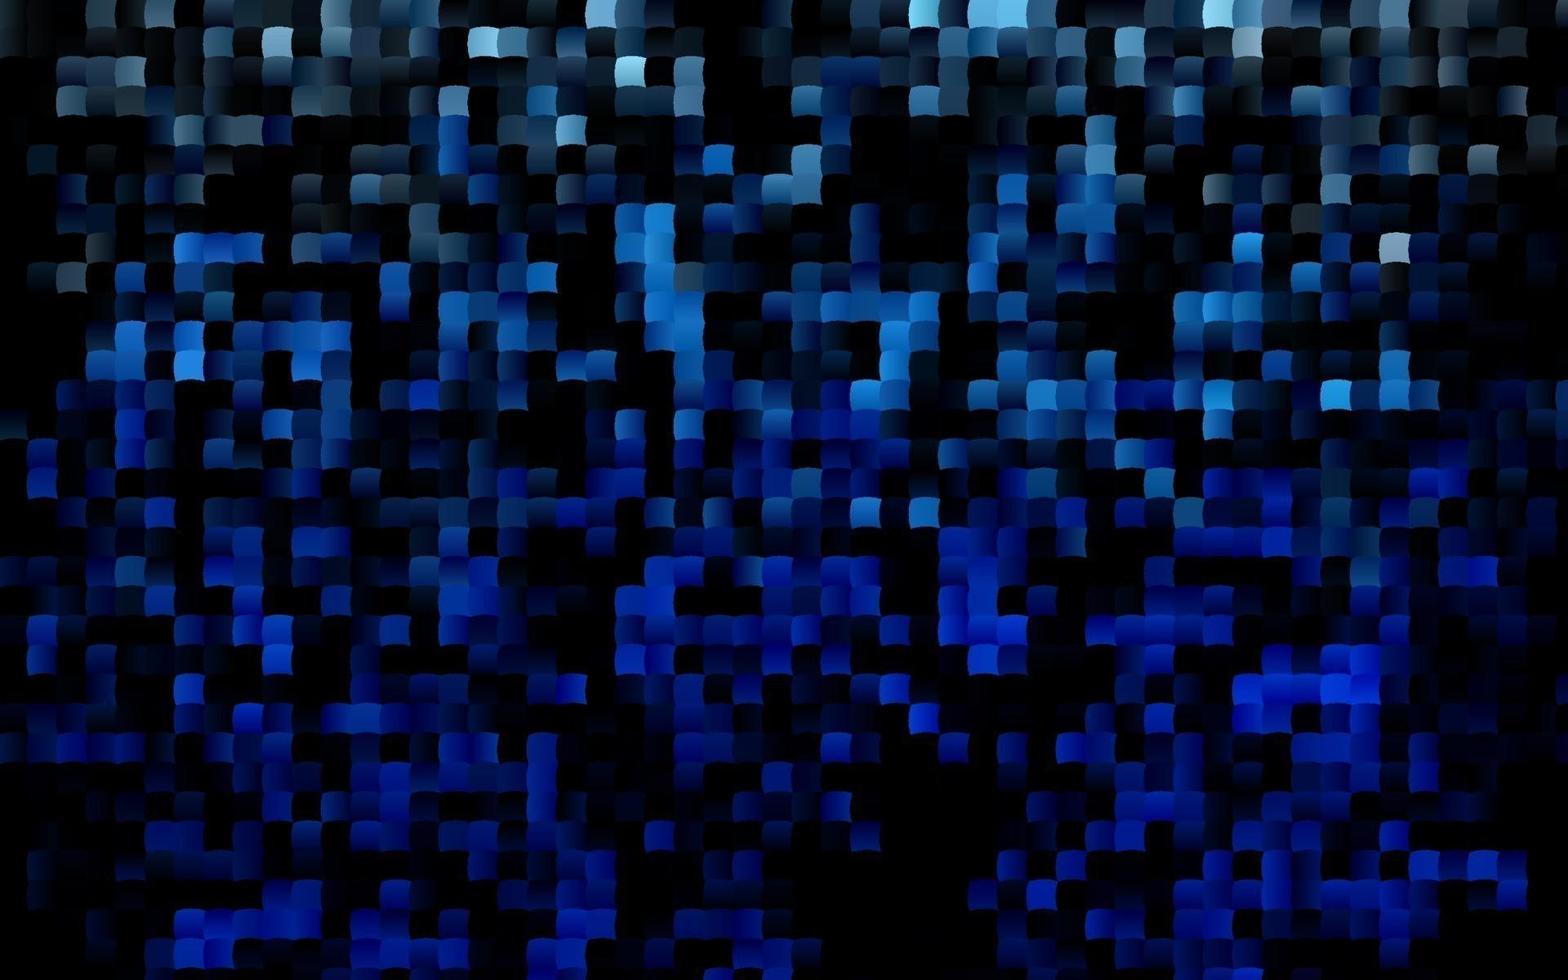 capa de vetor azul escuro em estilo poligonal.